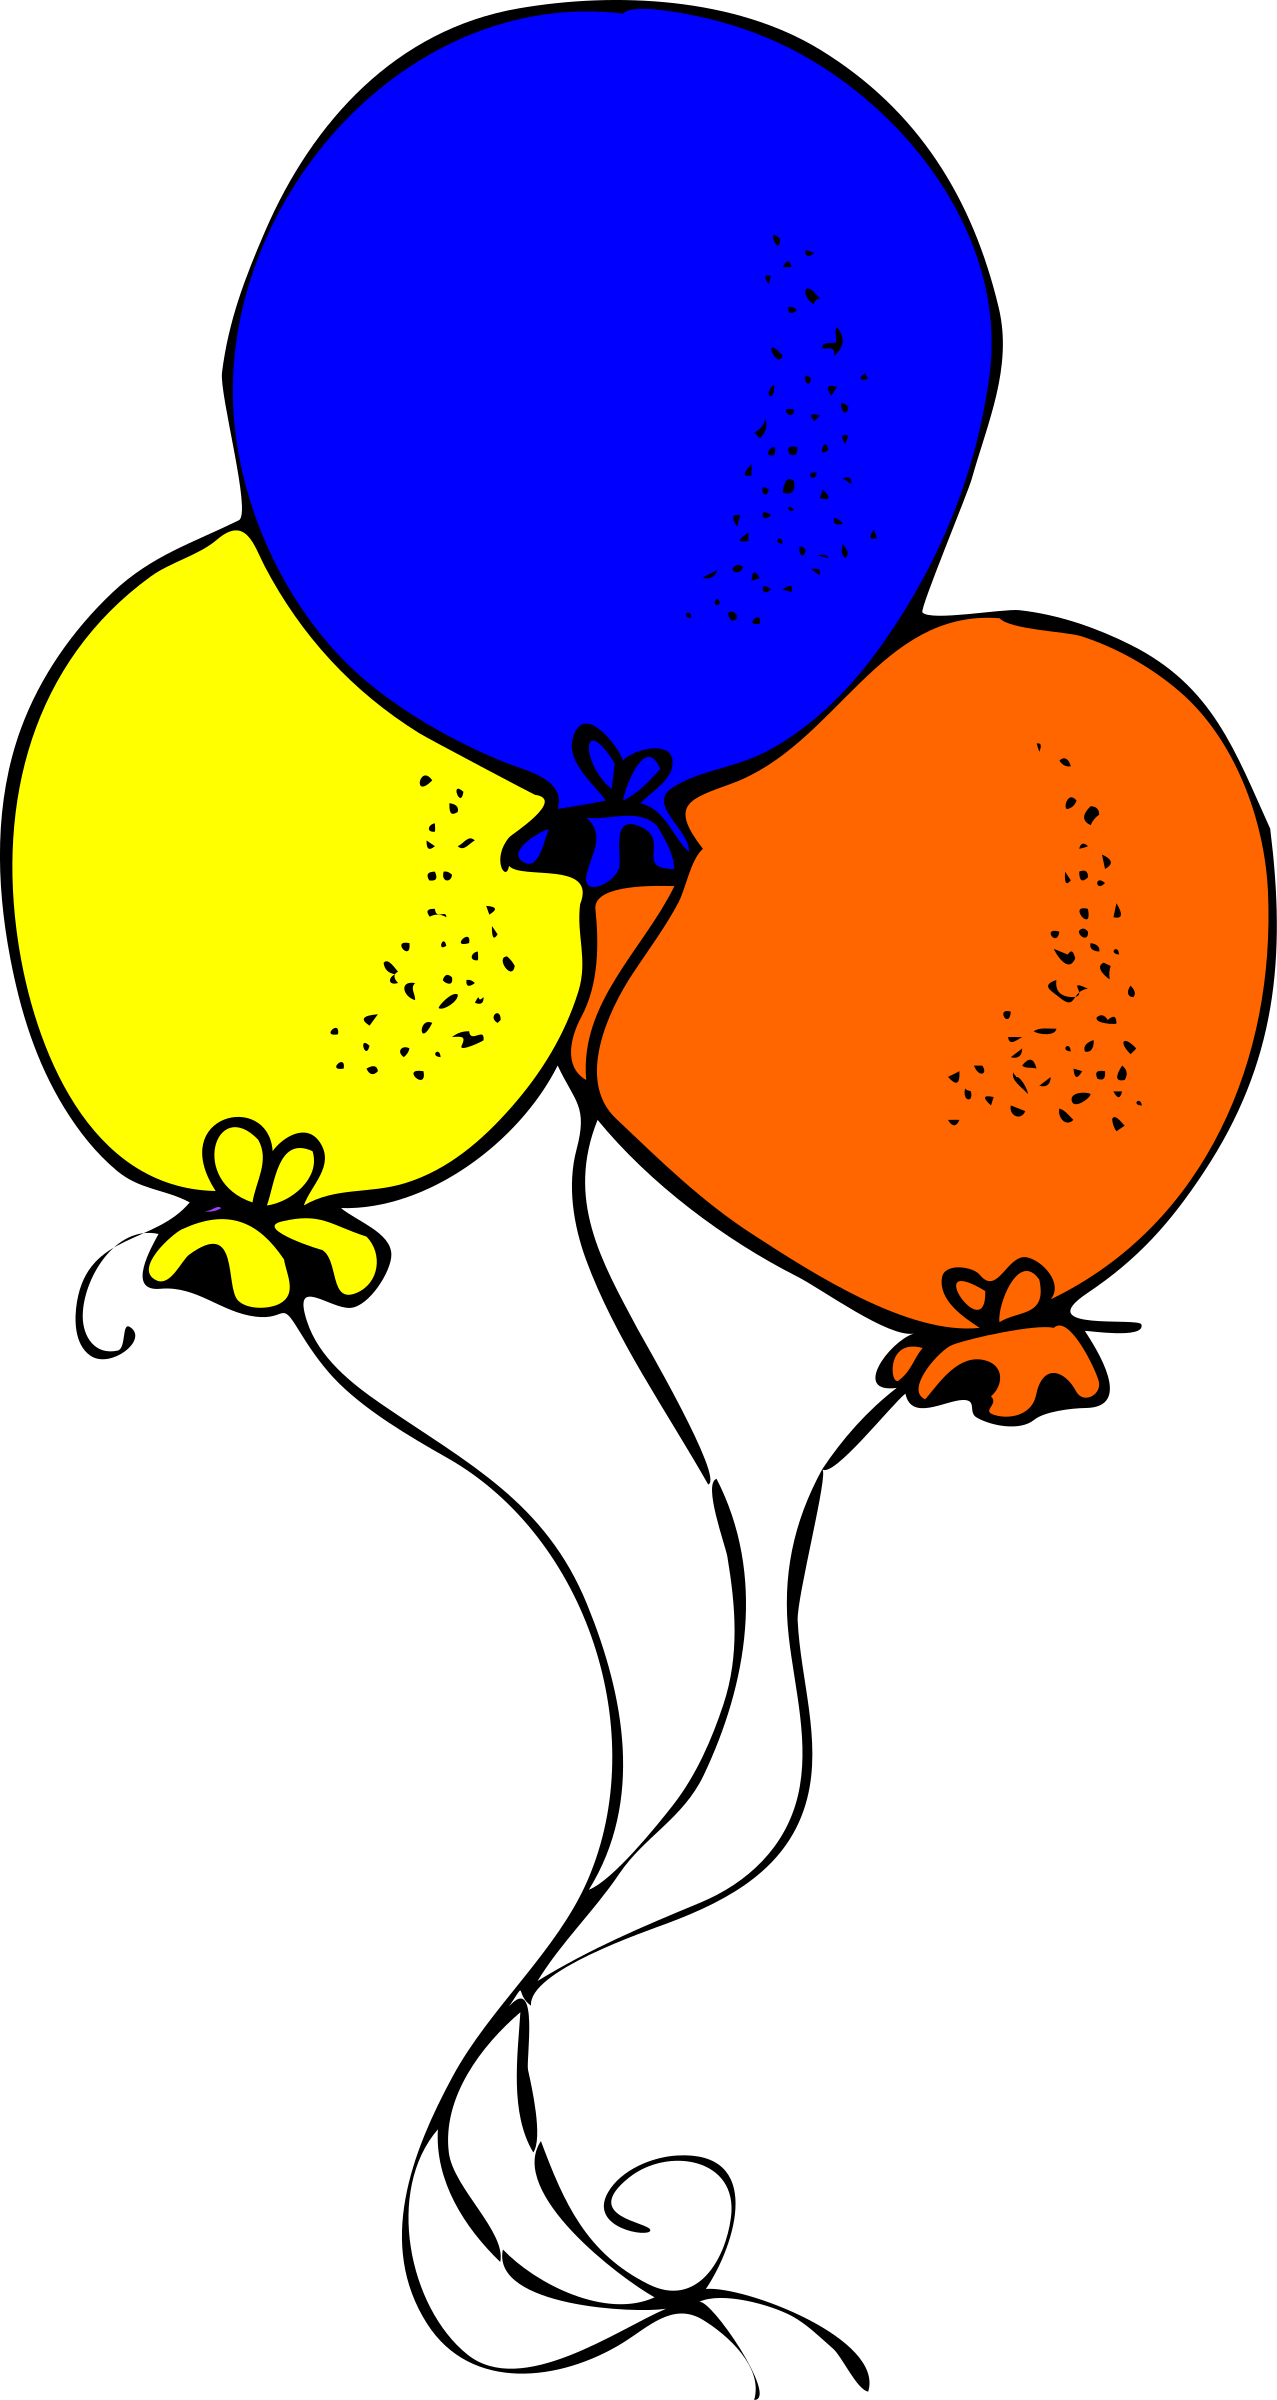 Big Image - Balloons Blue Orange And Yellow (1277x2400)